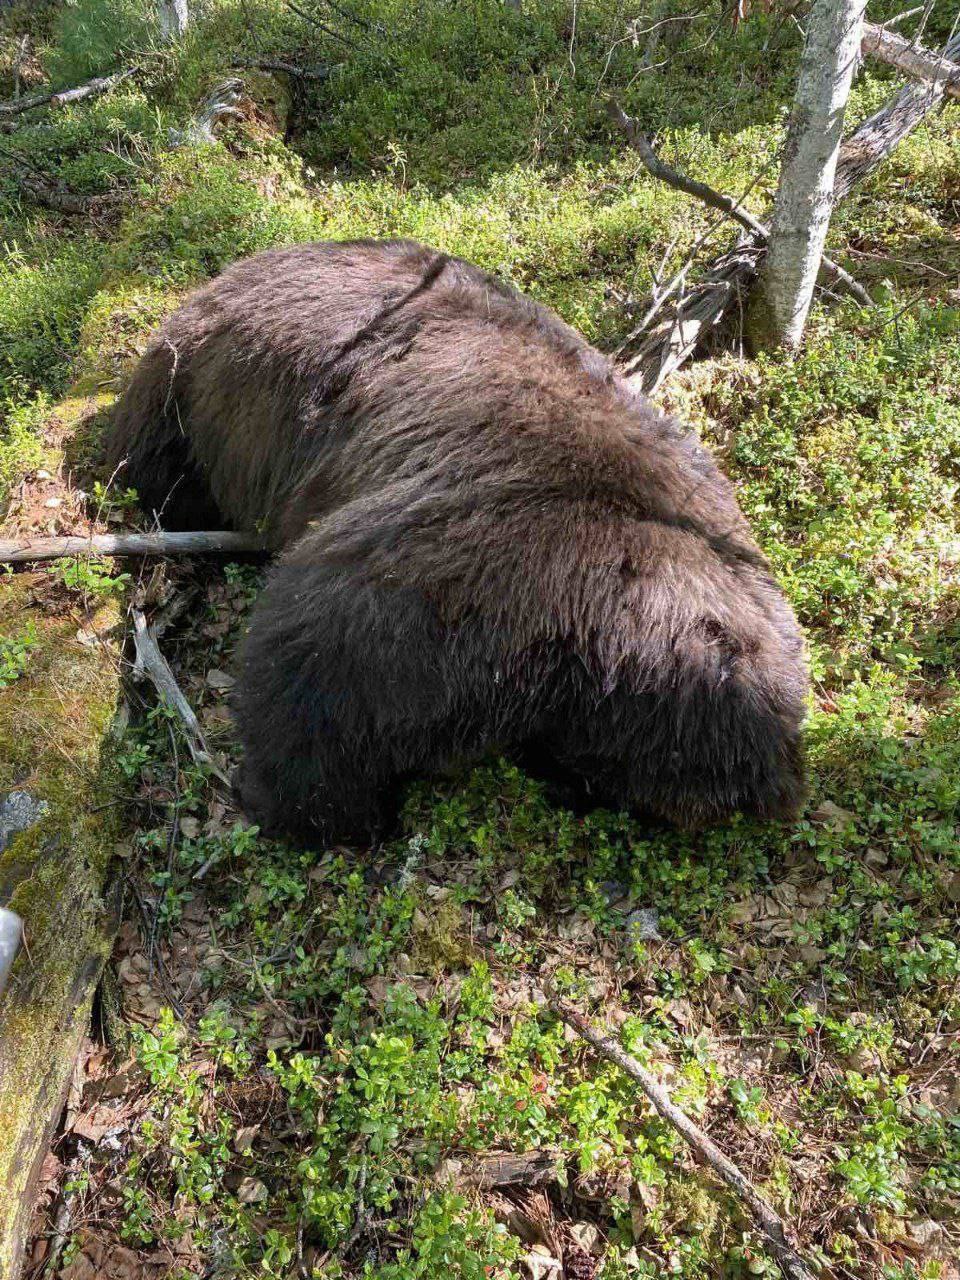 The hunter killed the bear